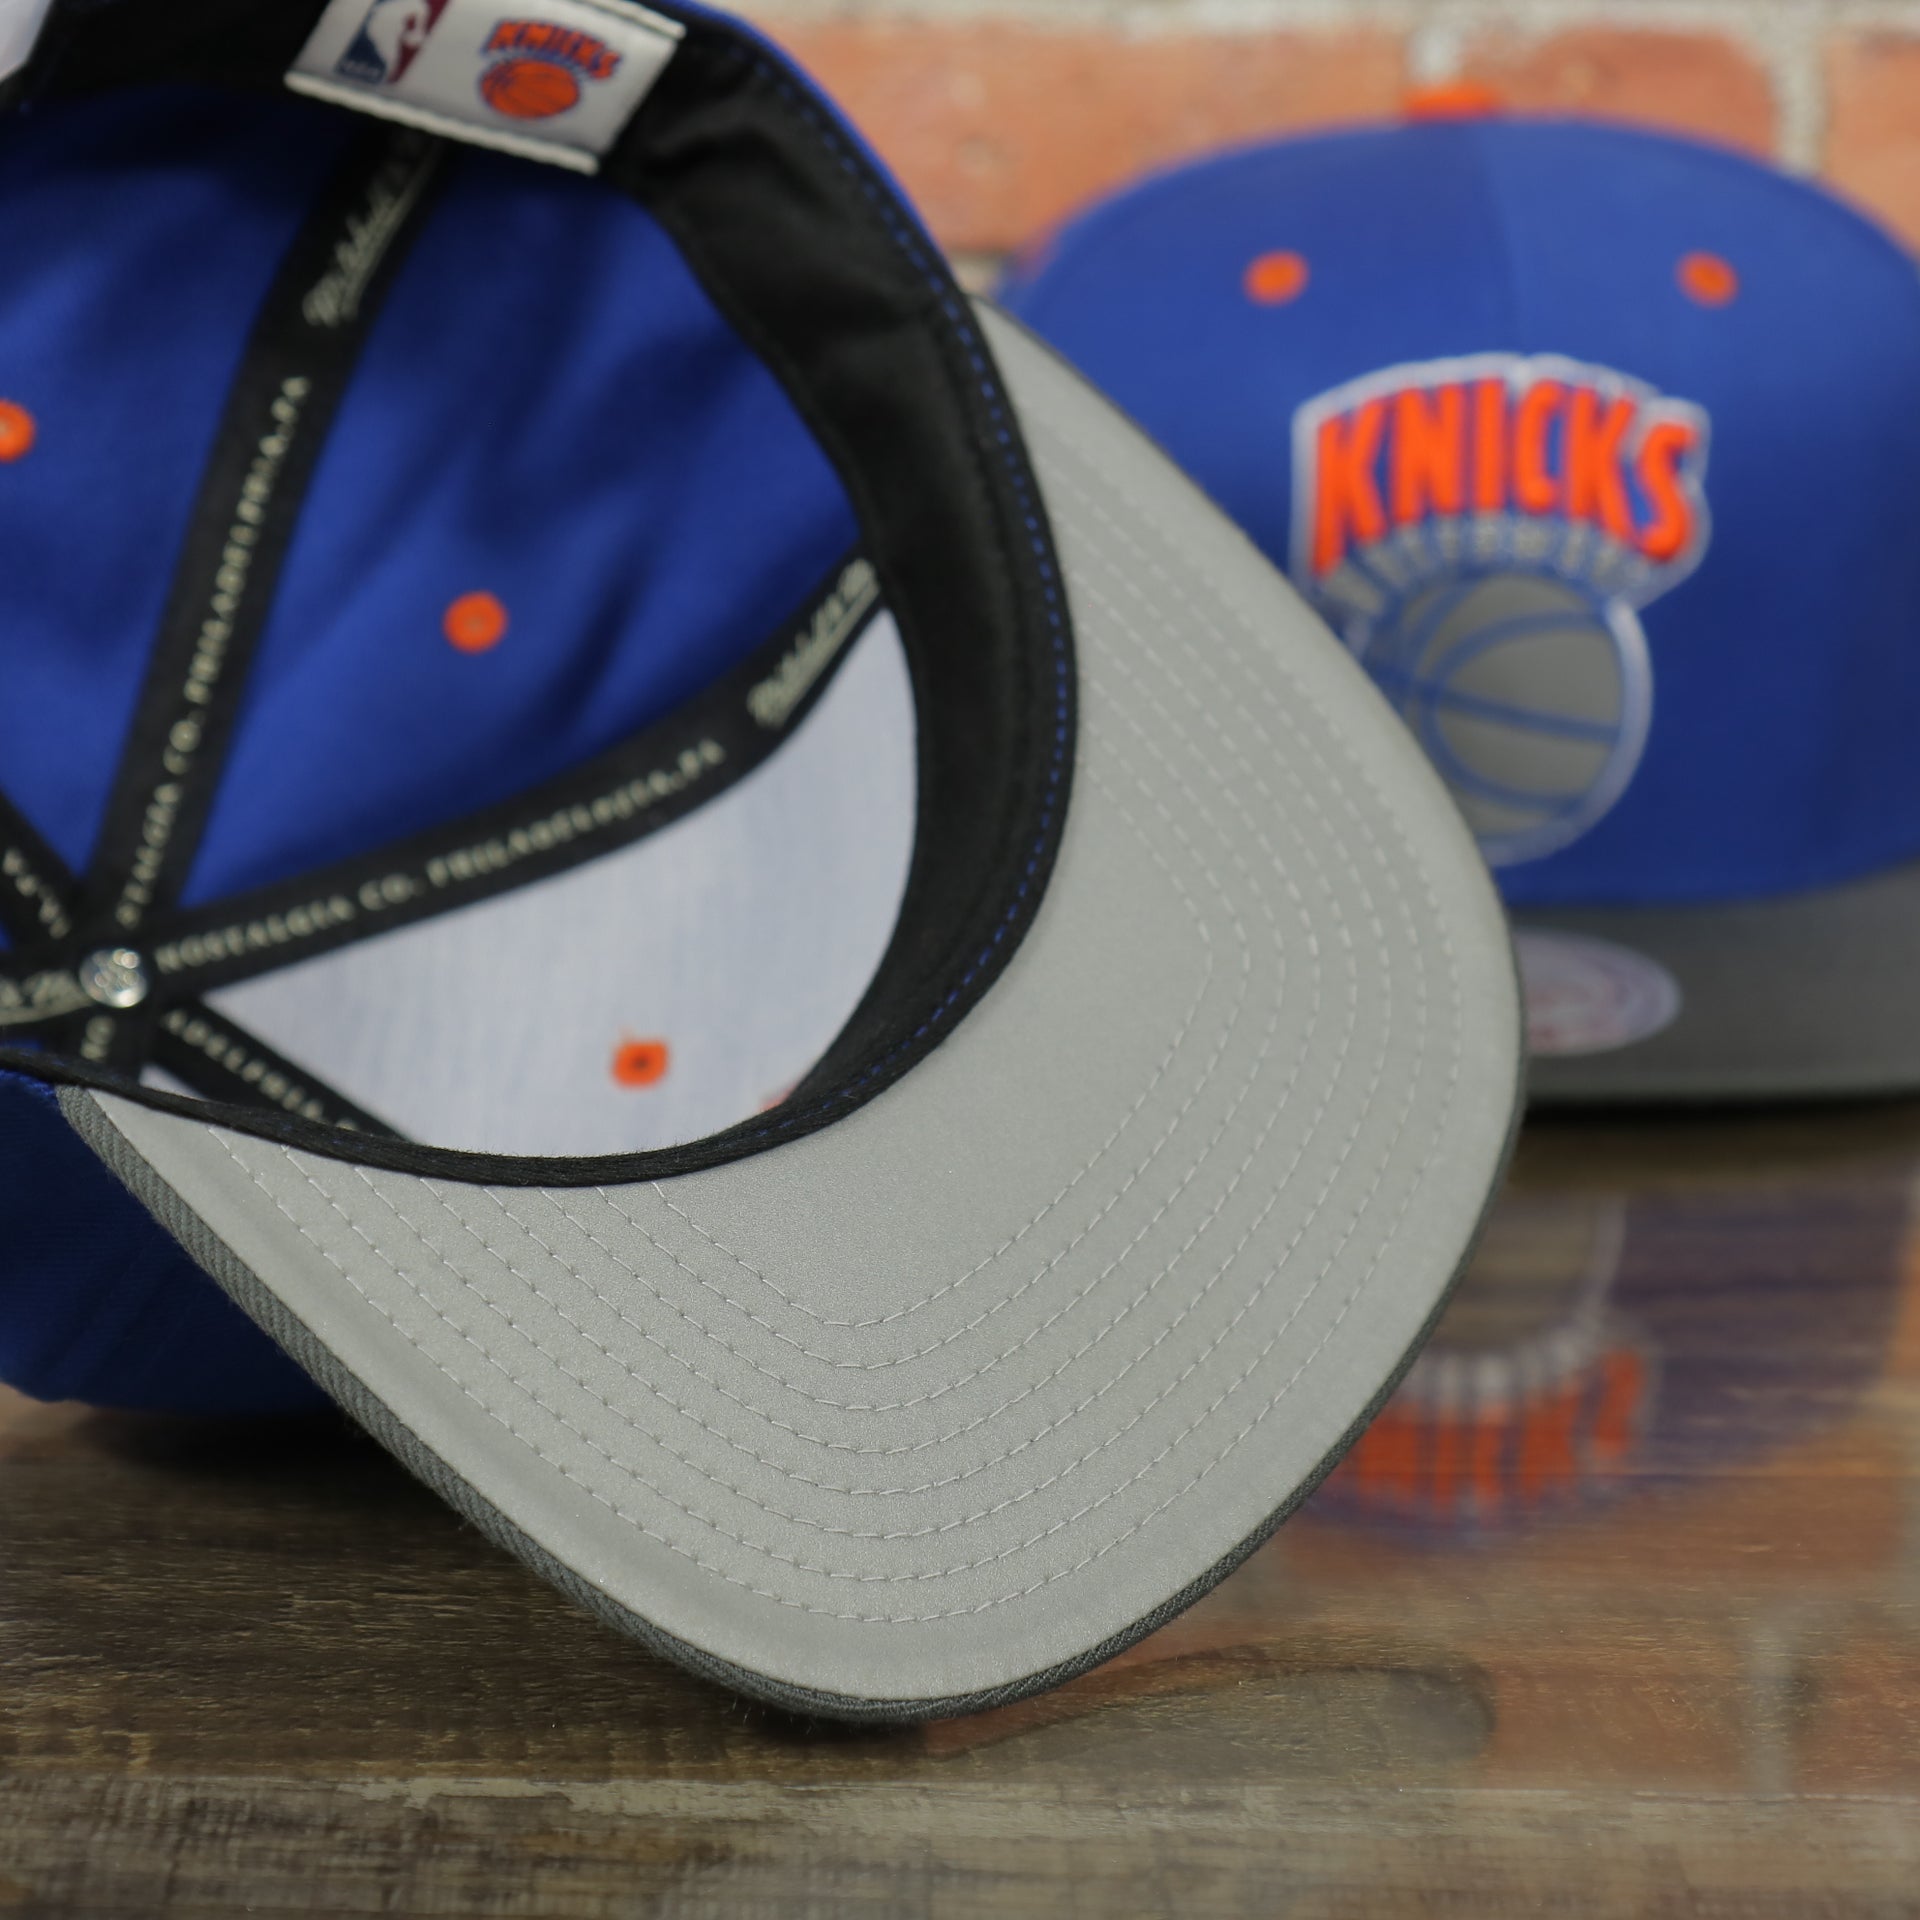 gray under visor on the Knicks Gray Bottom Snapback | New York Knicks Retro Grey Bottom Snap Cap